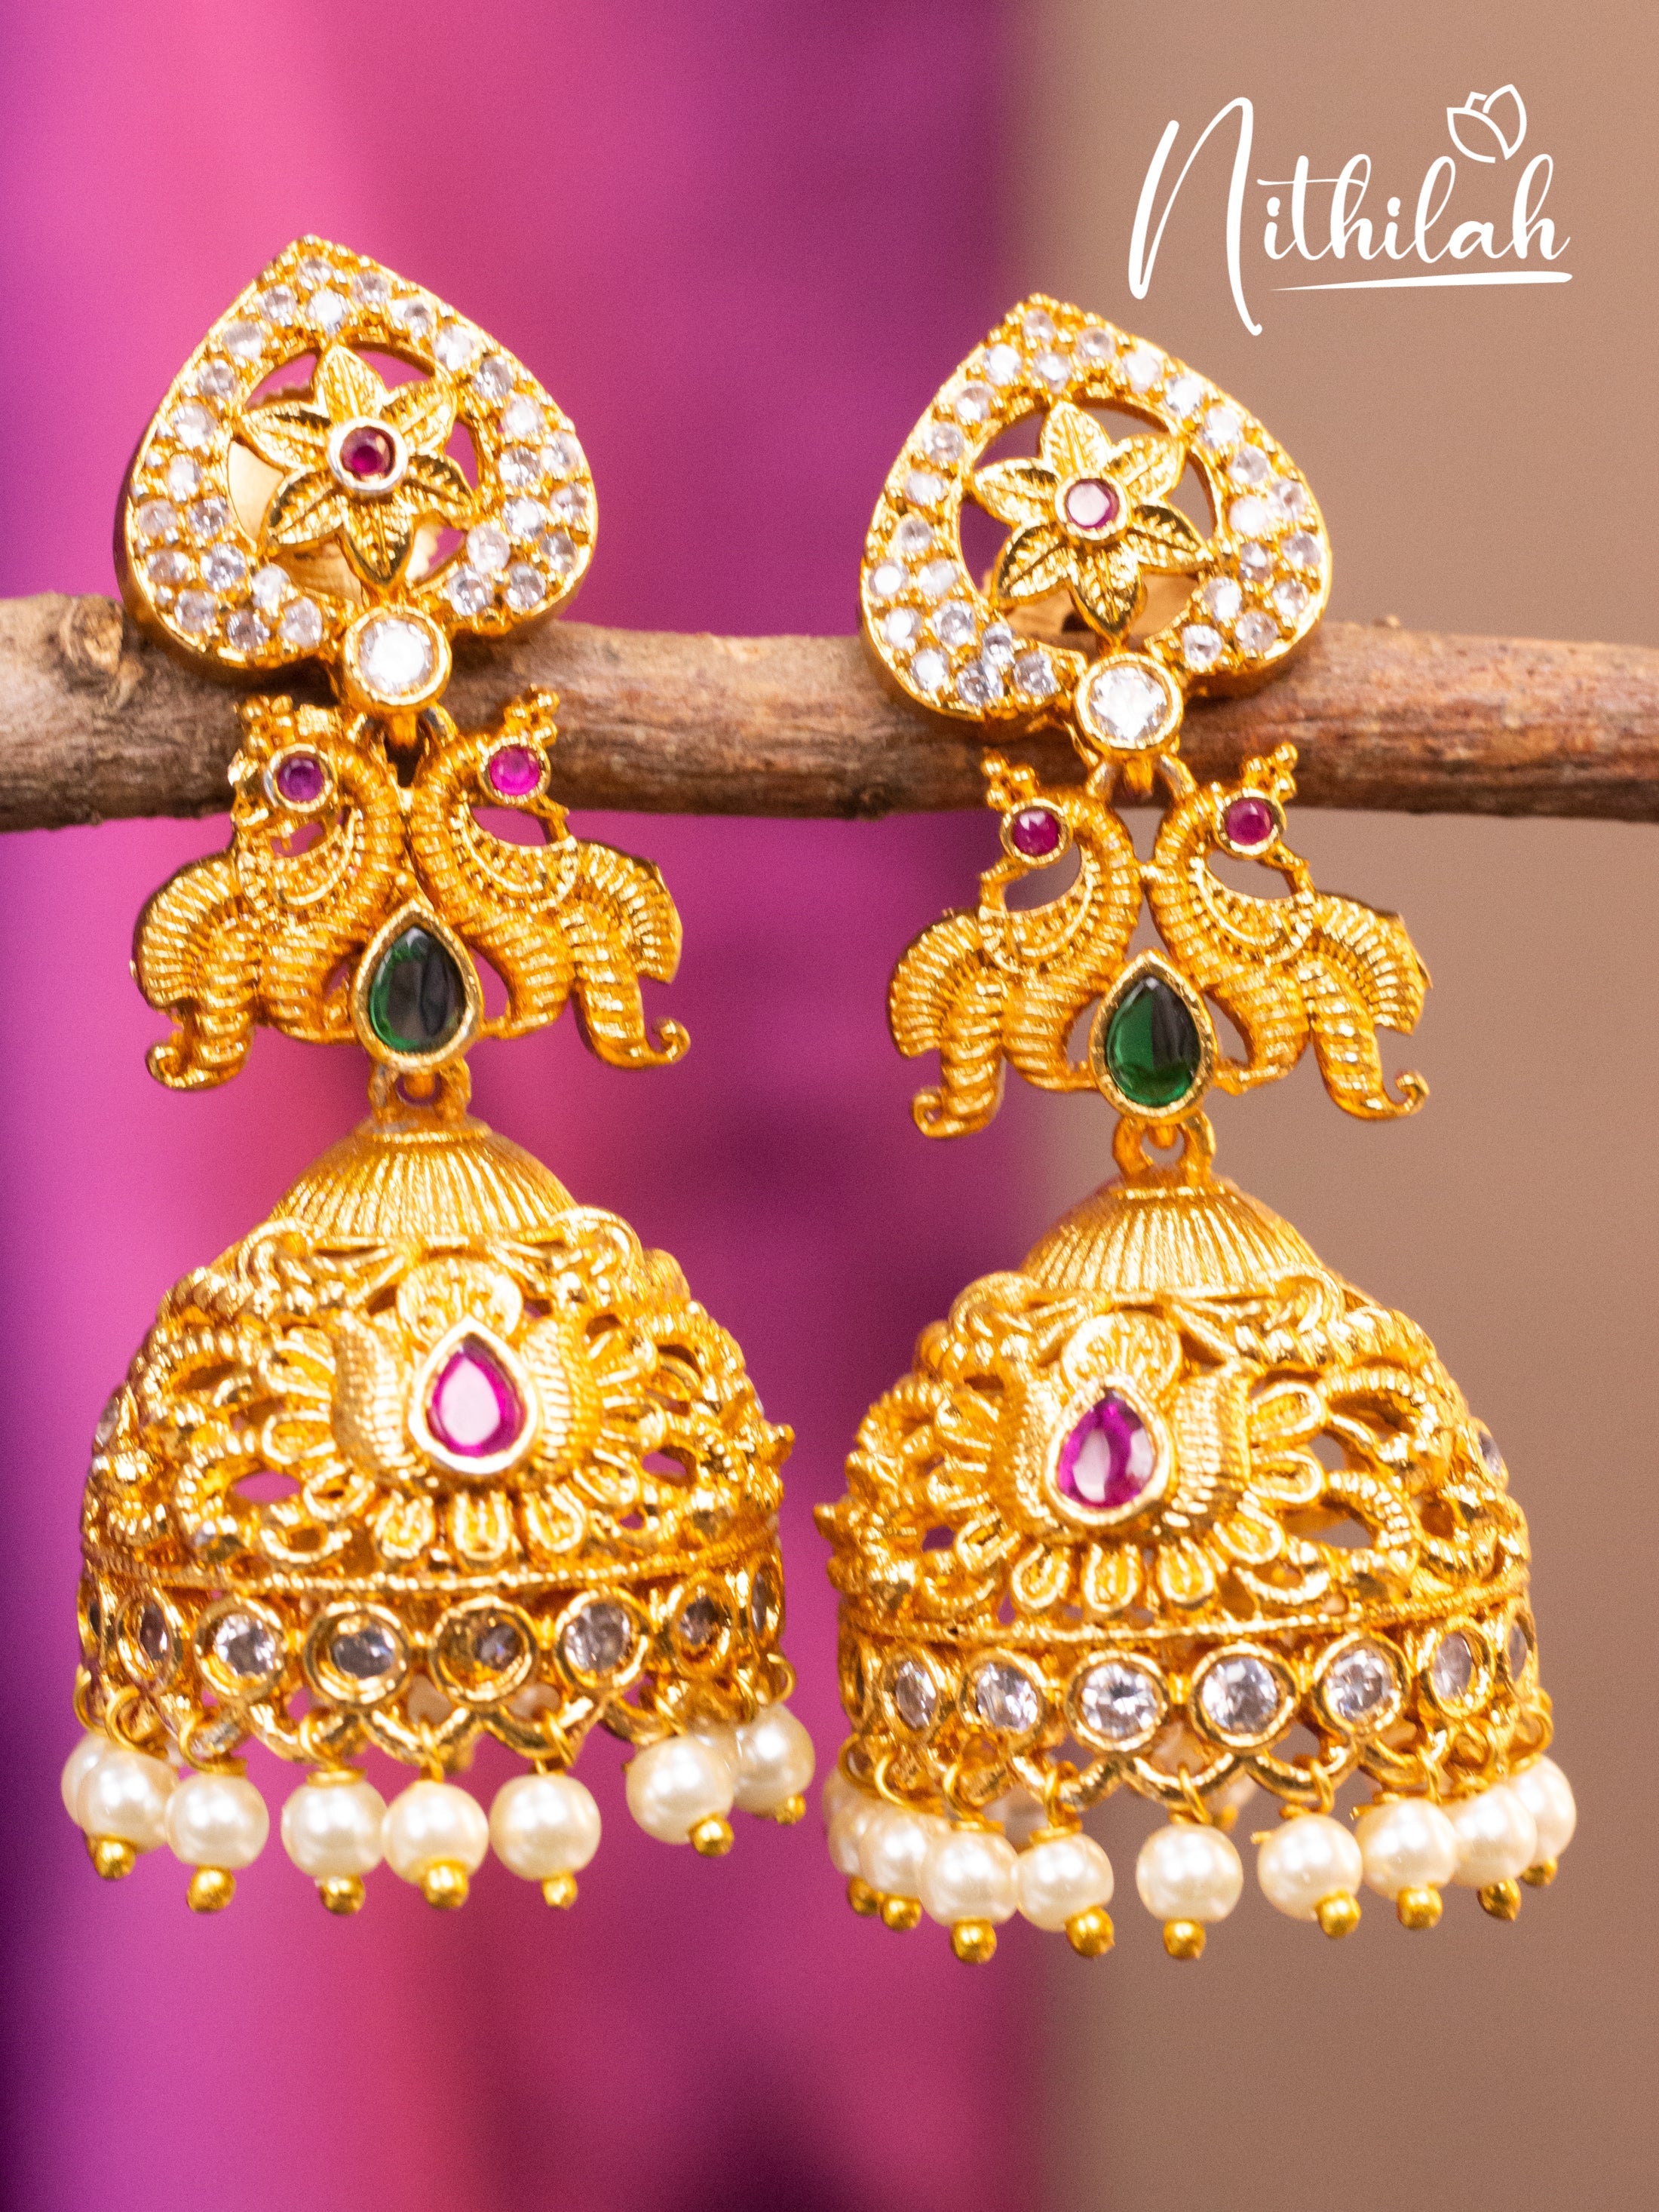 Nithilah Temple Earrings